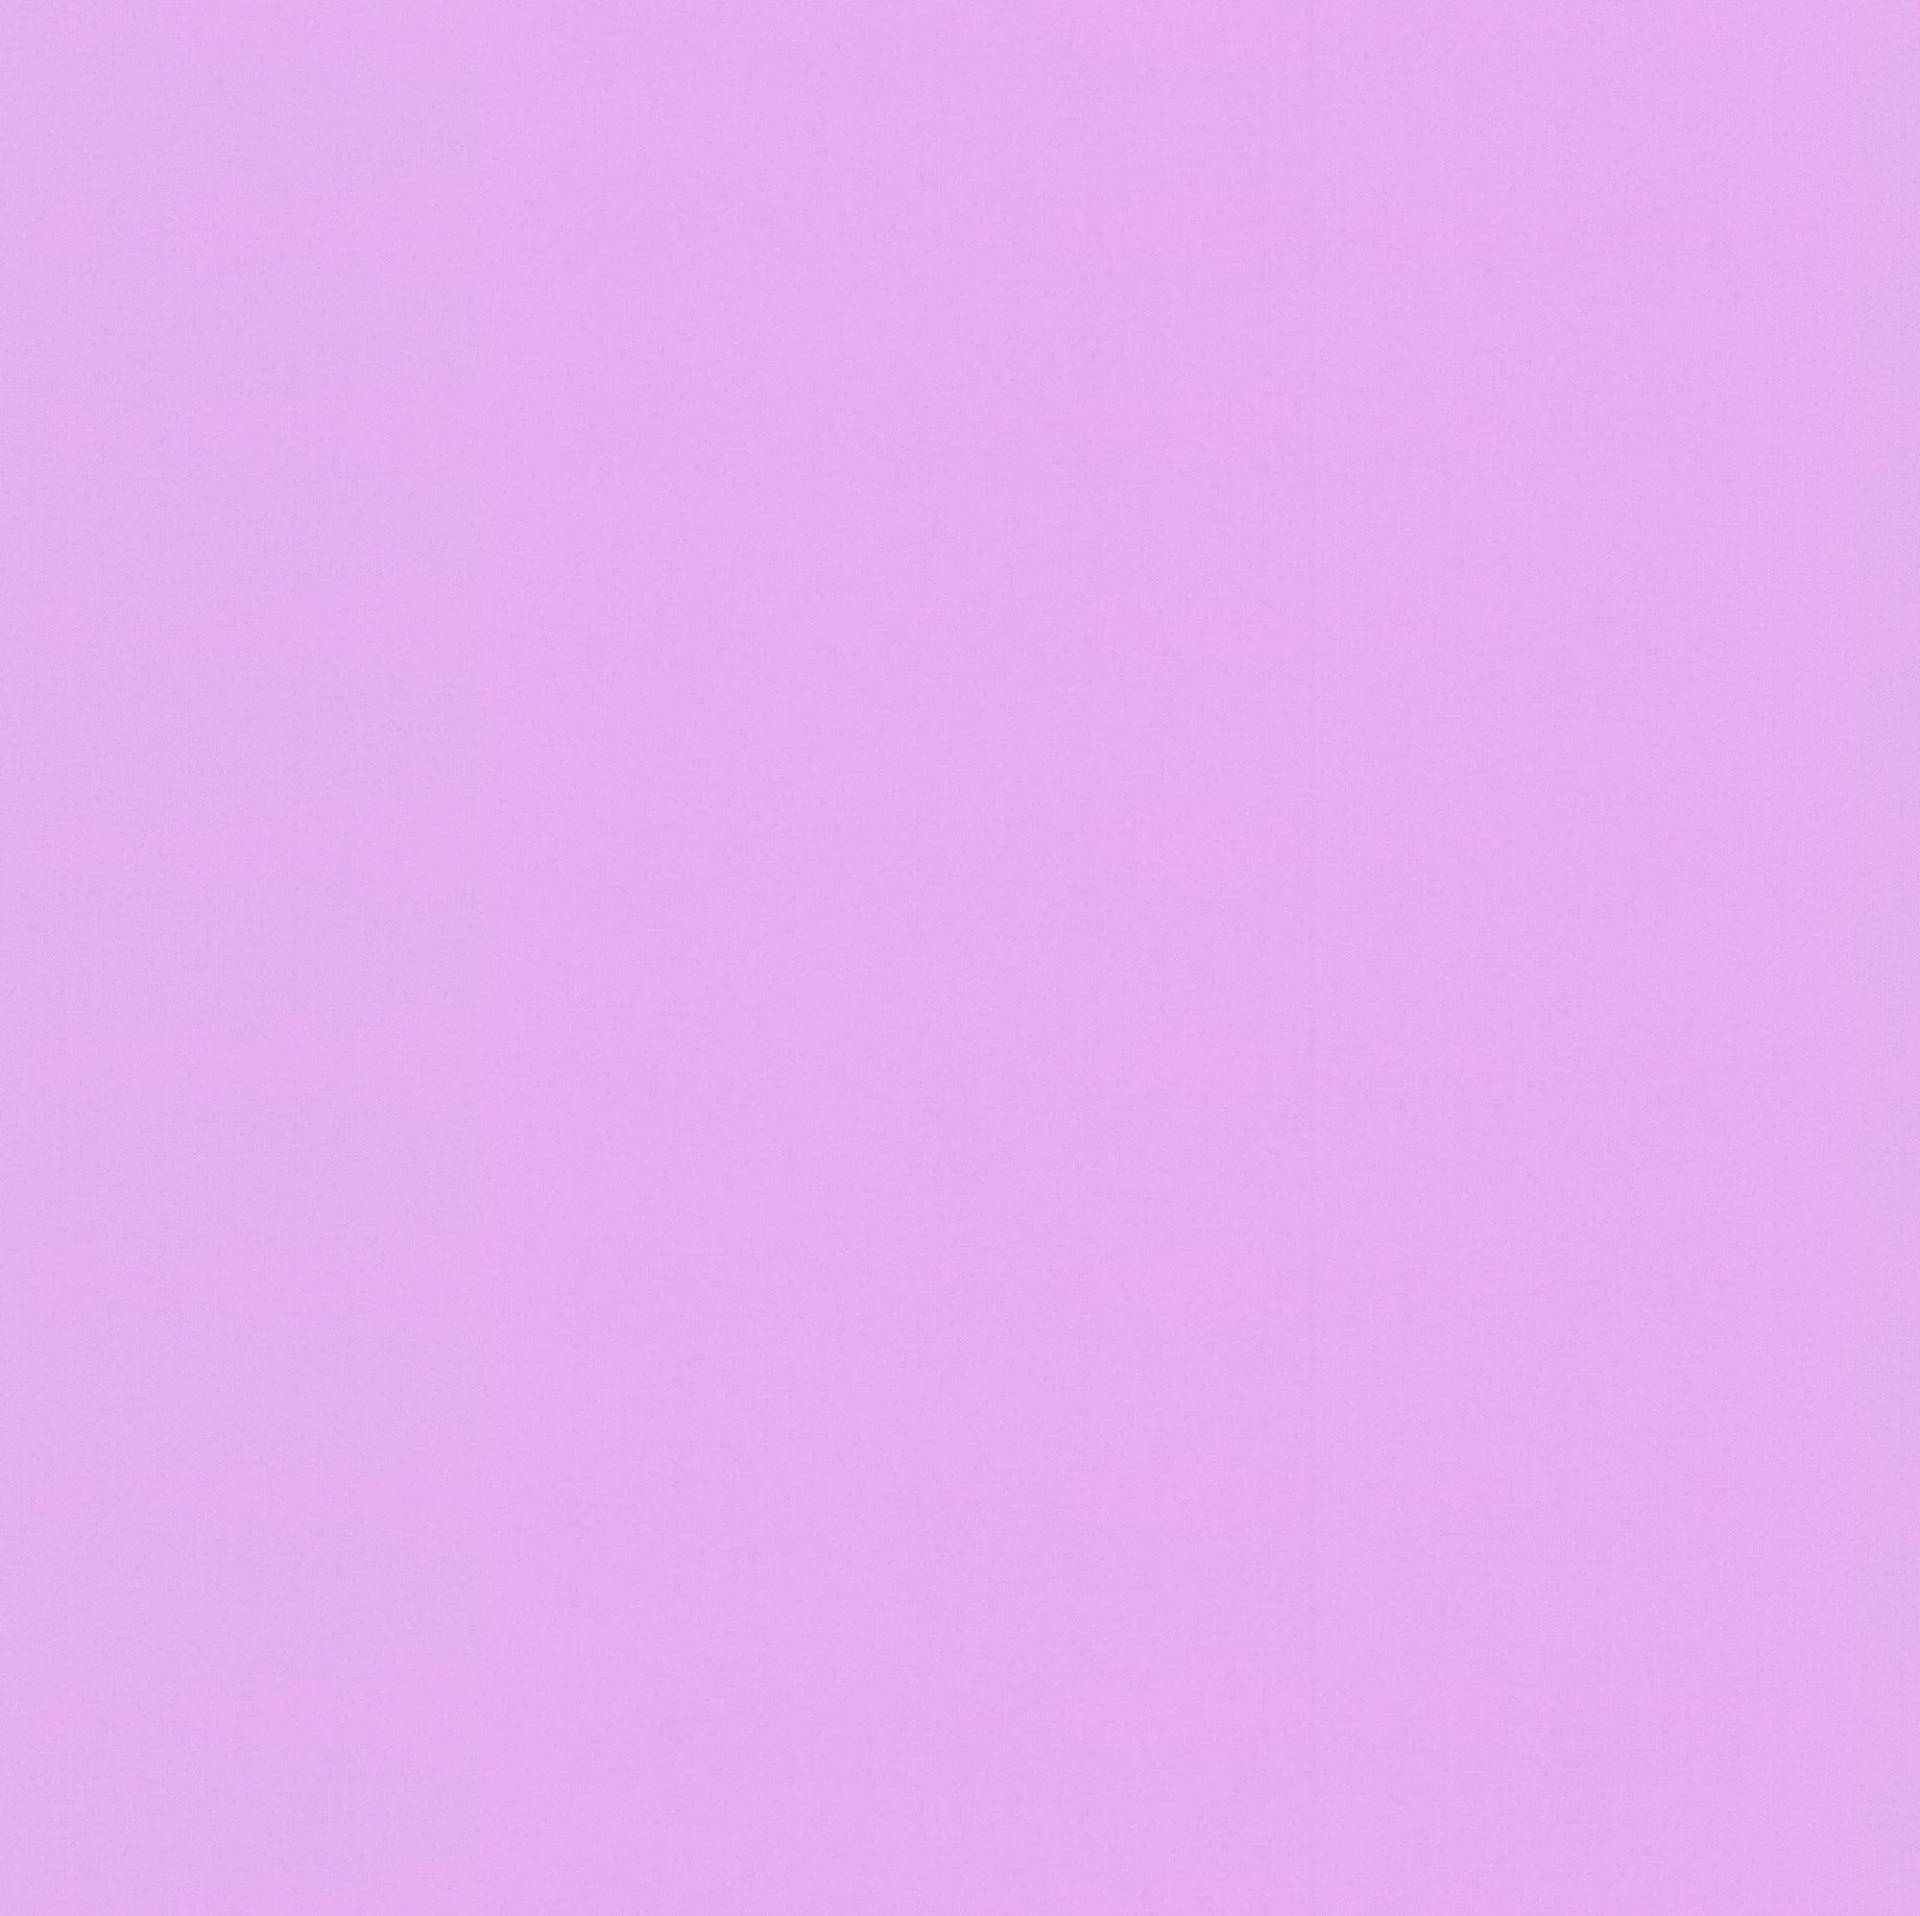 Pinkish Plain Purple Wallpaper